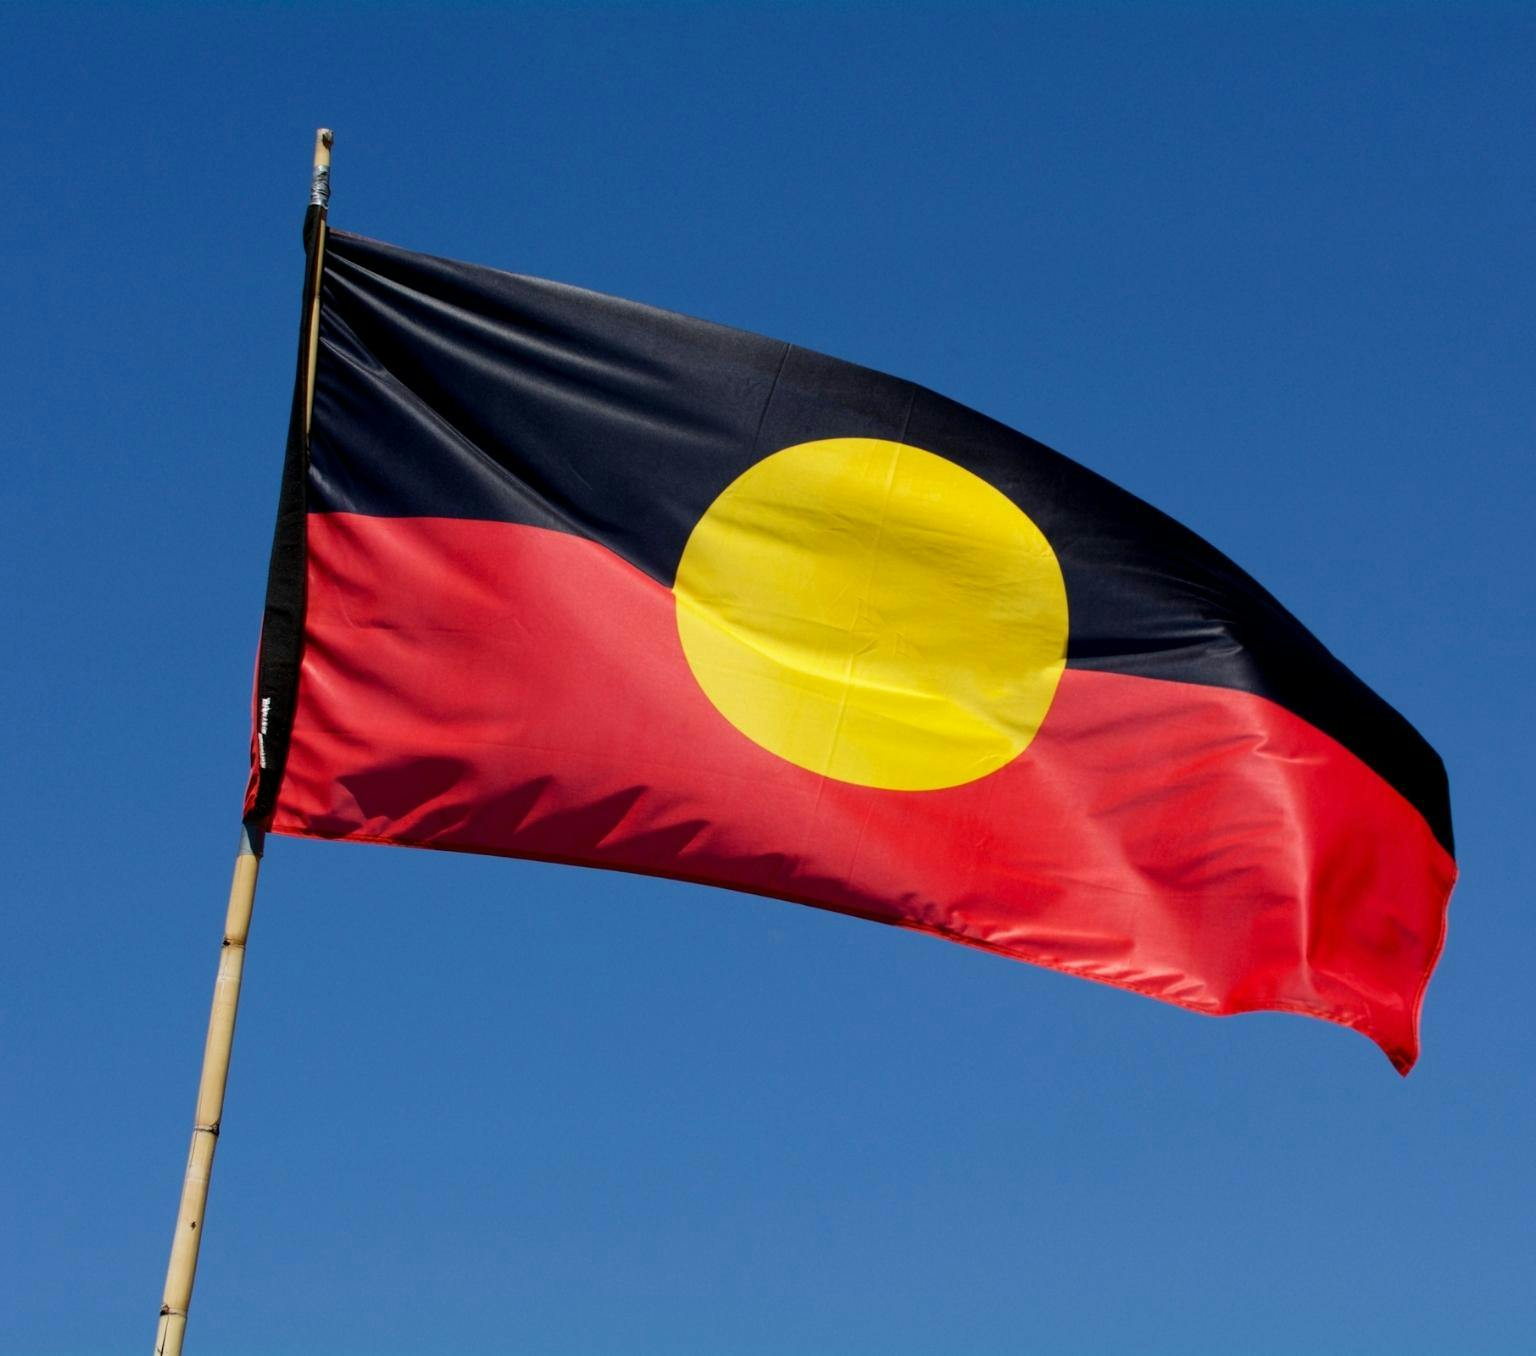 Aboriginal flag flying against a blue sky.